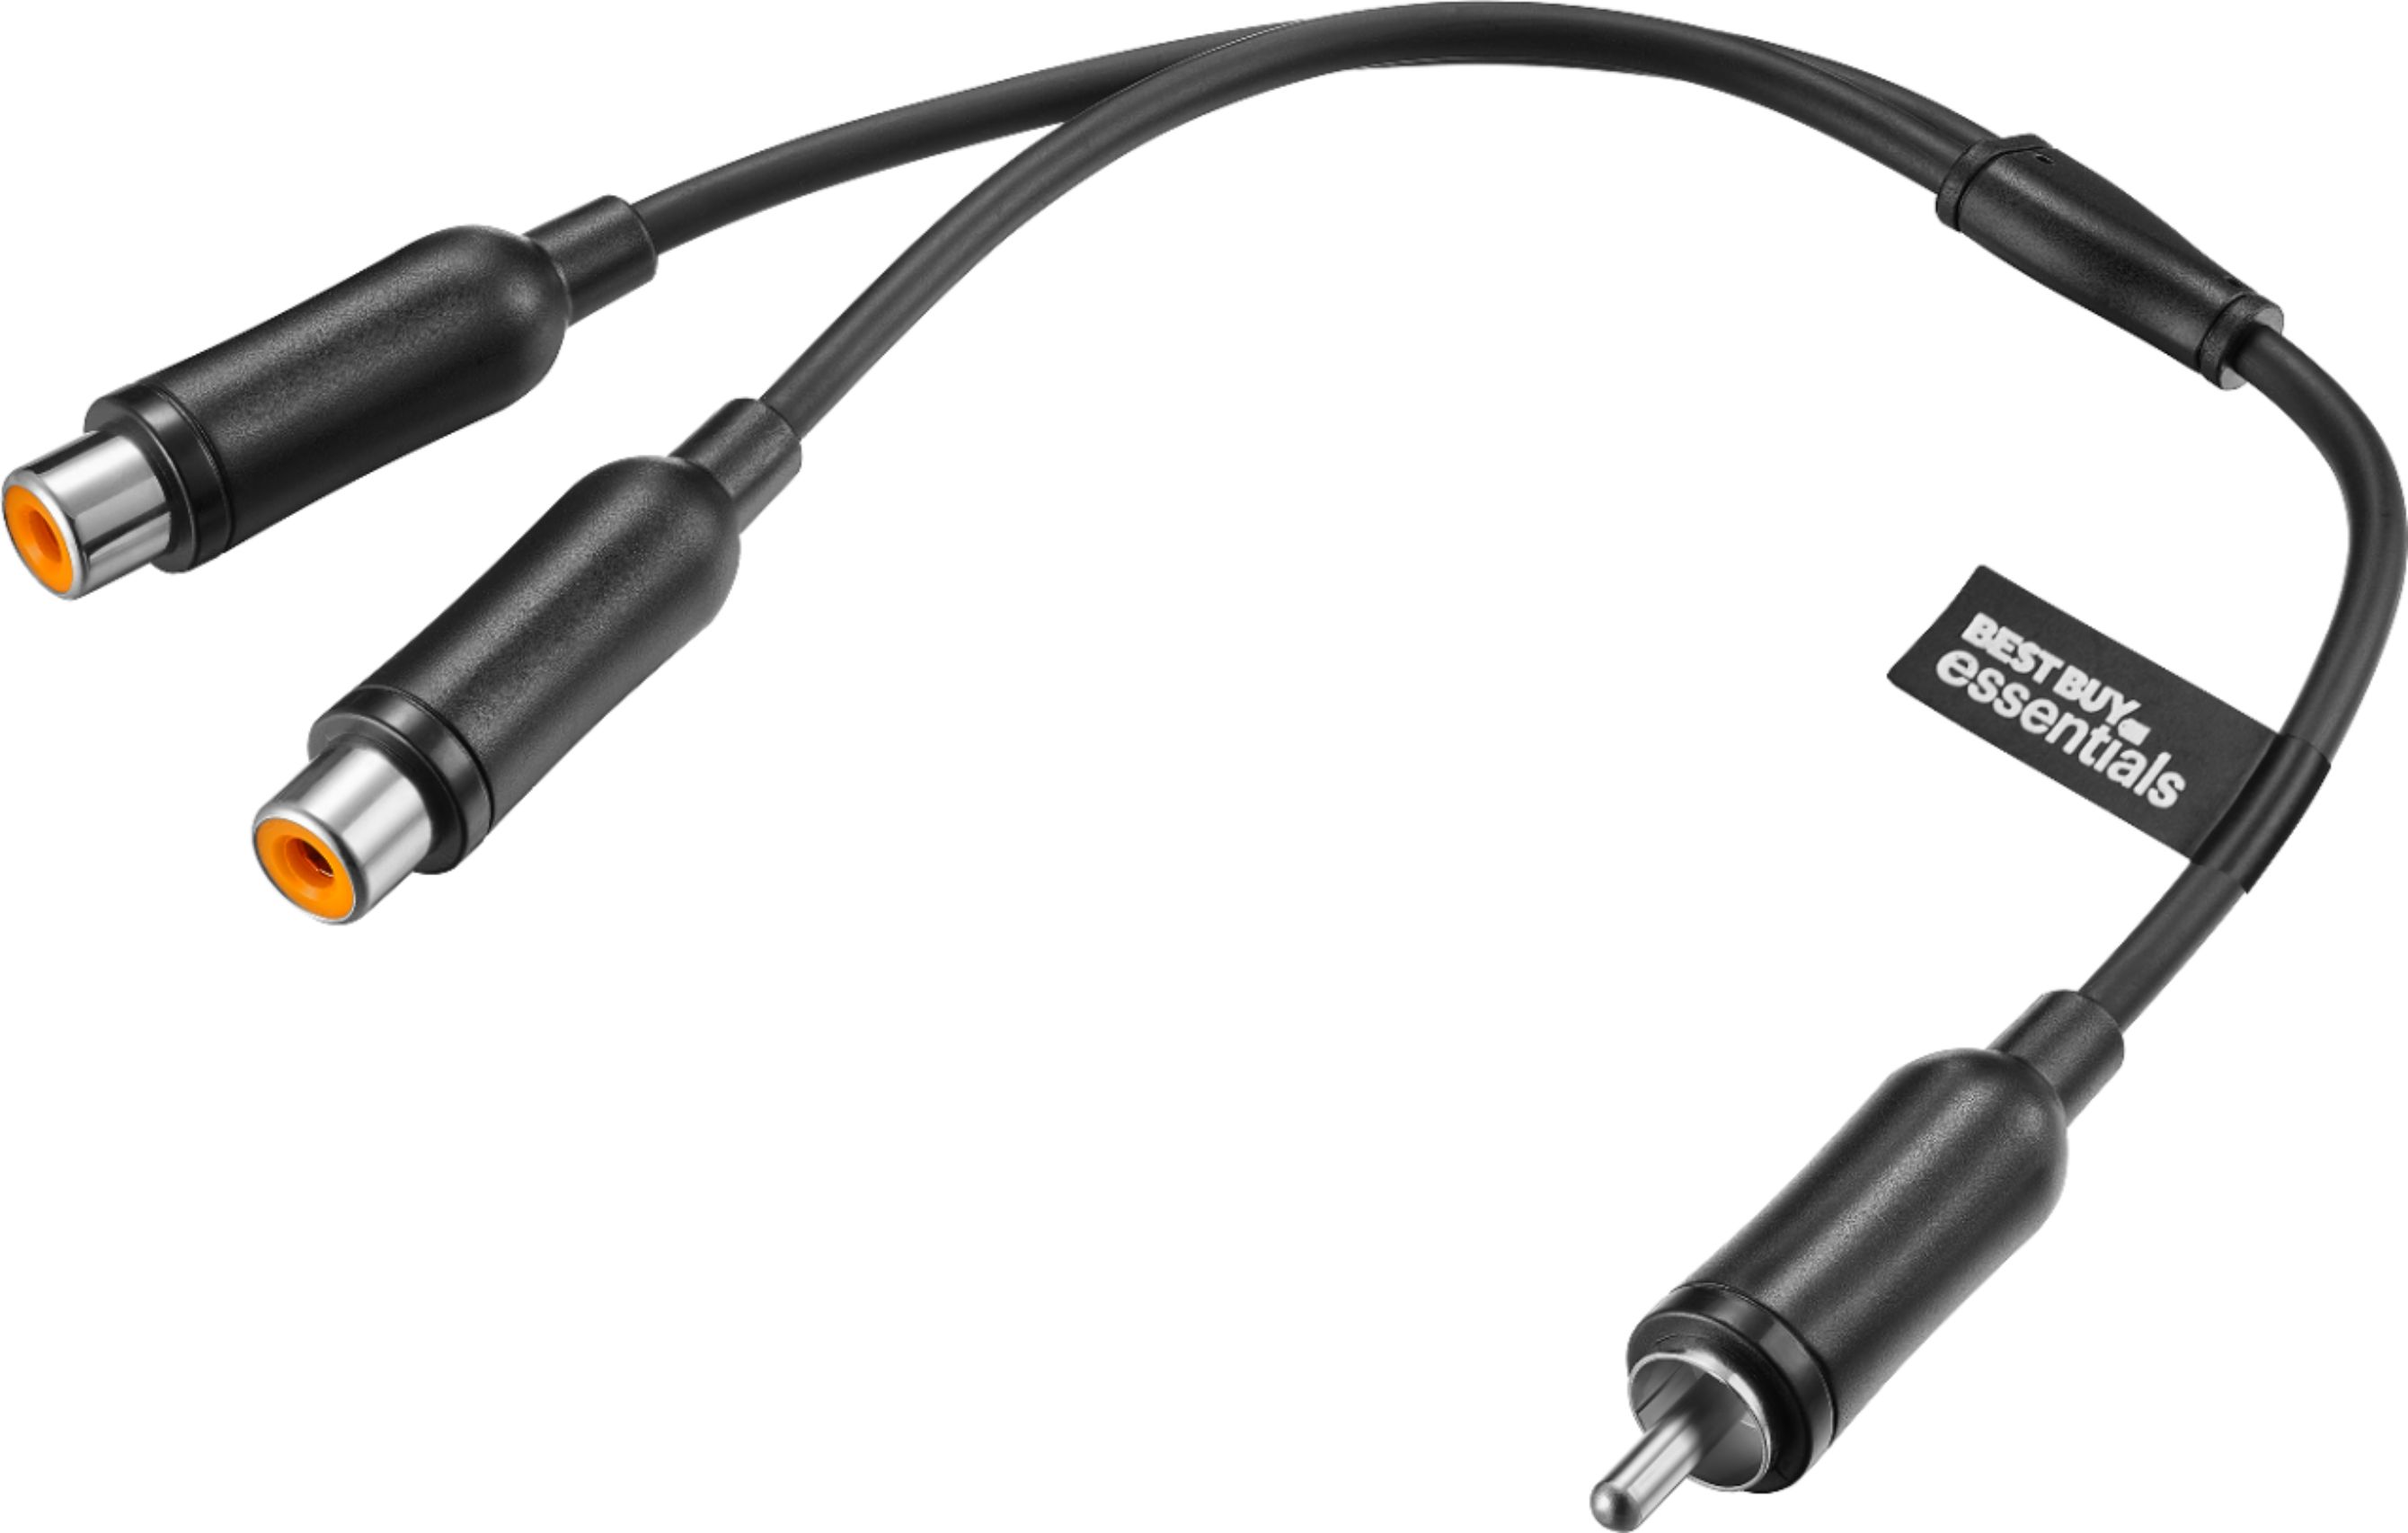 Tech Discount - TD® Câble jack rca 3.5 mm male femelle voiture